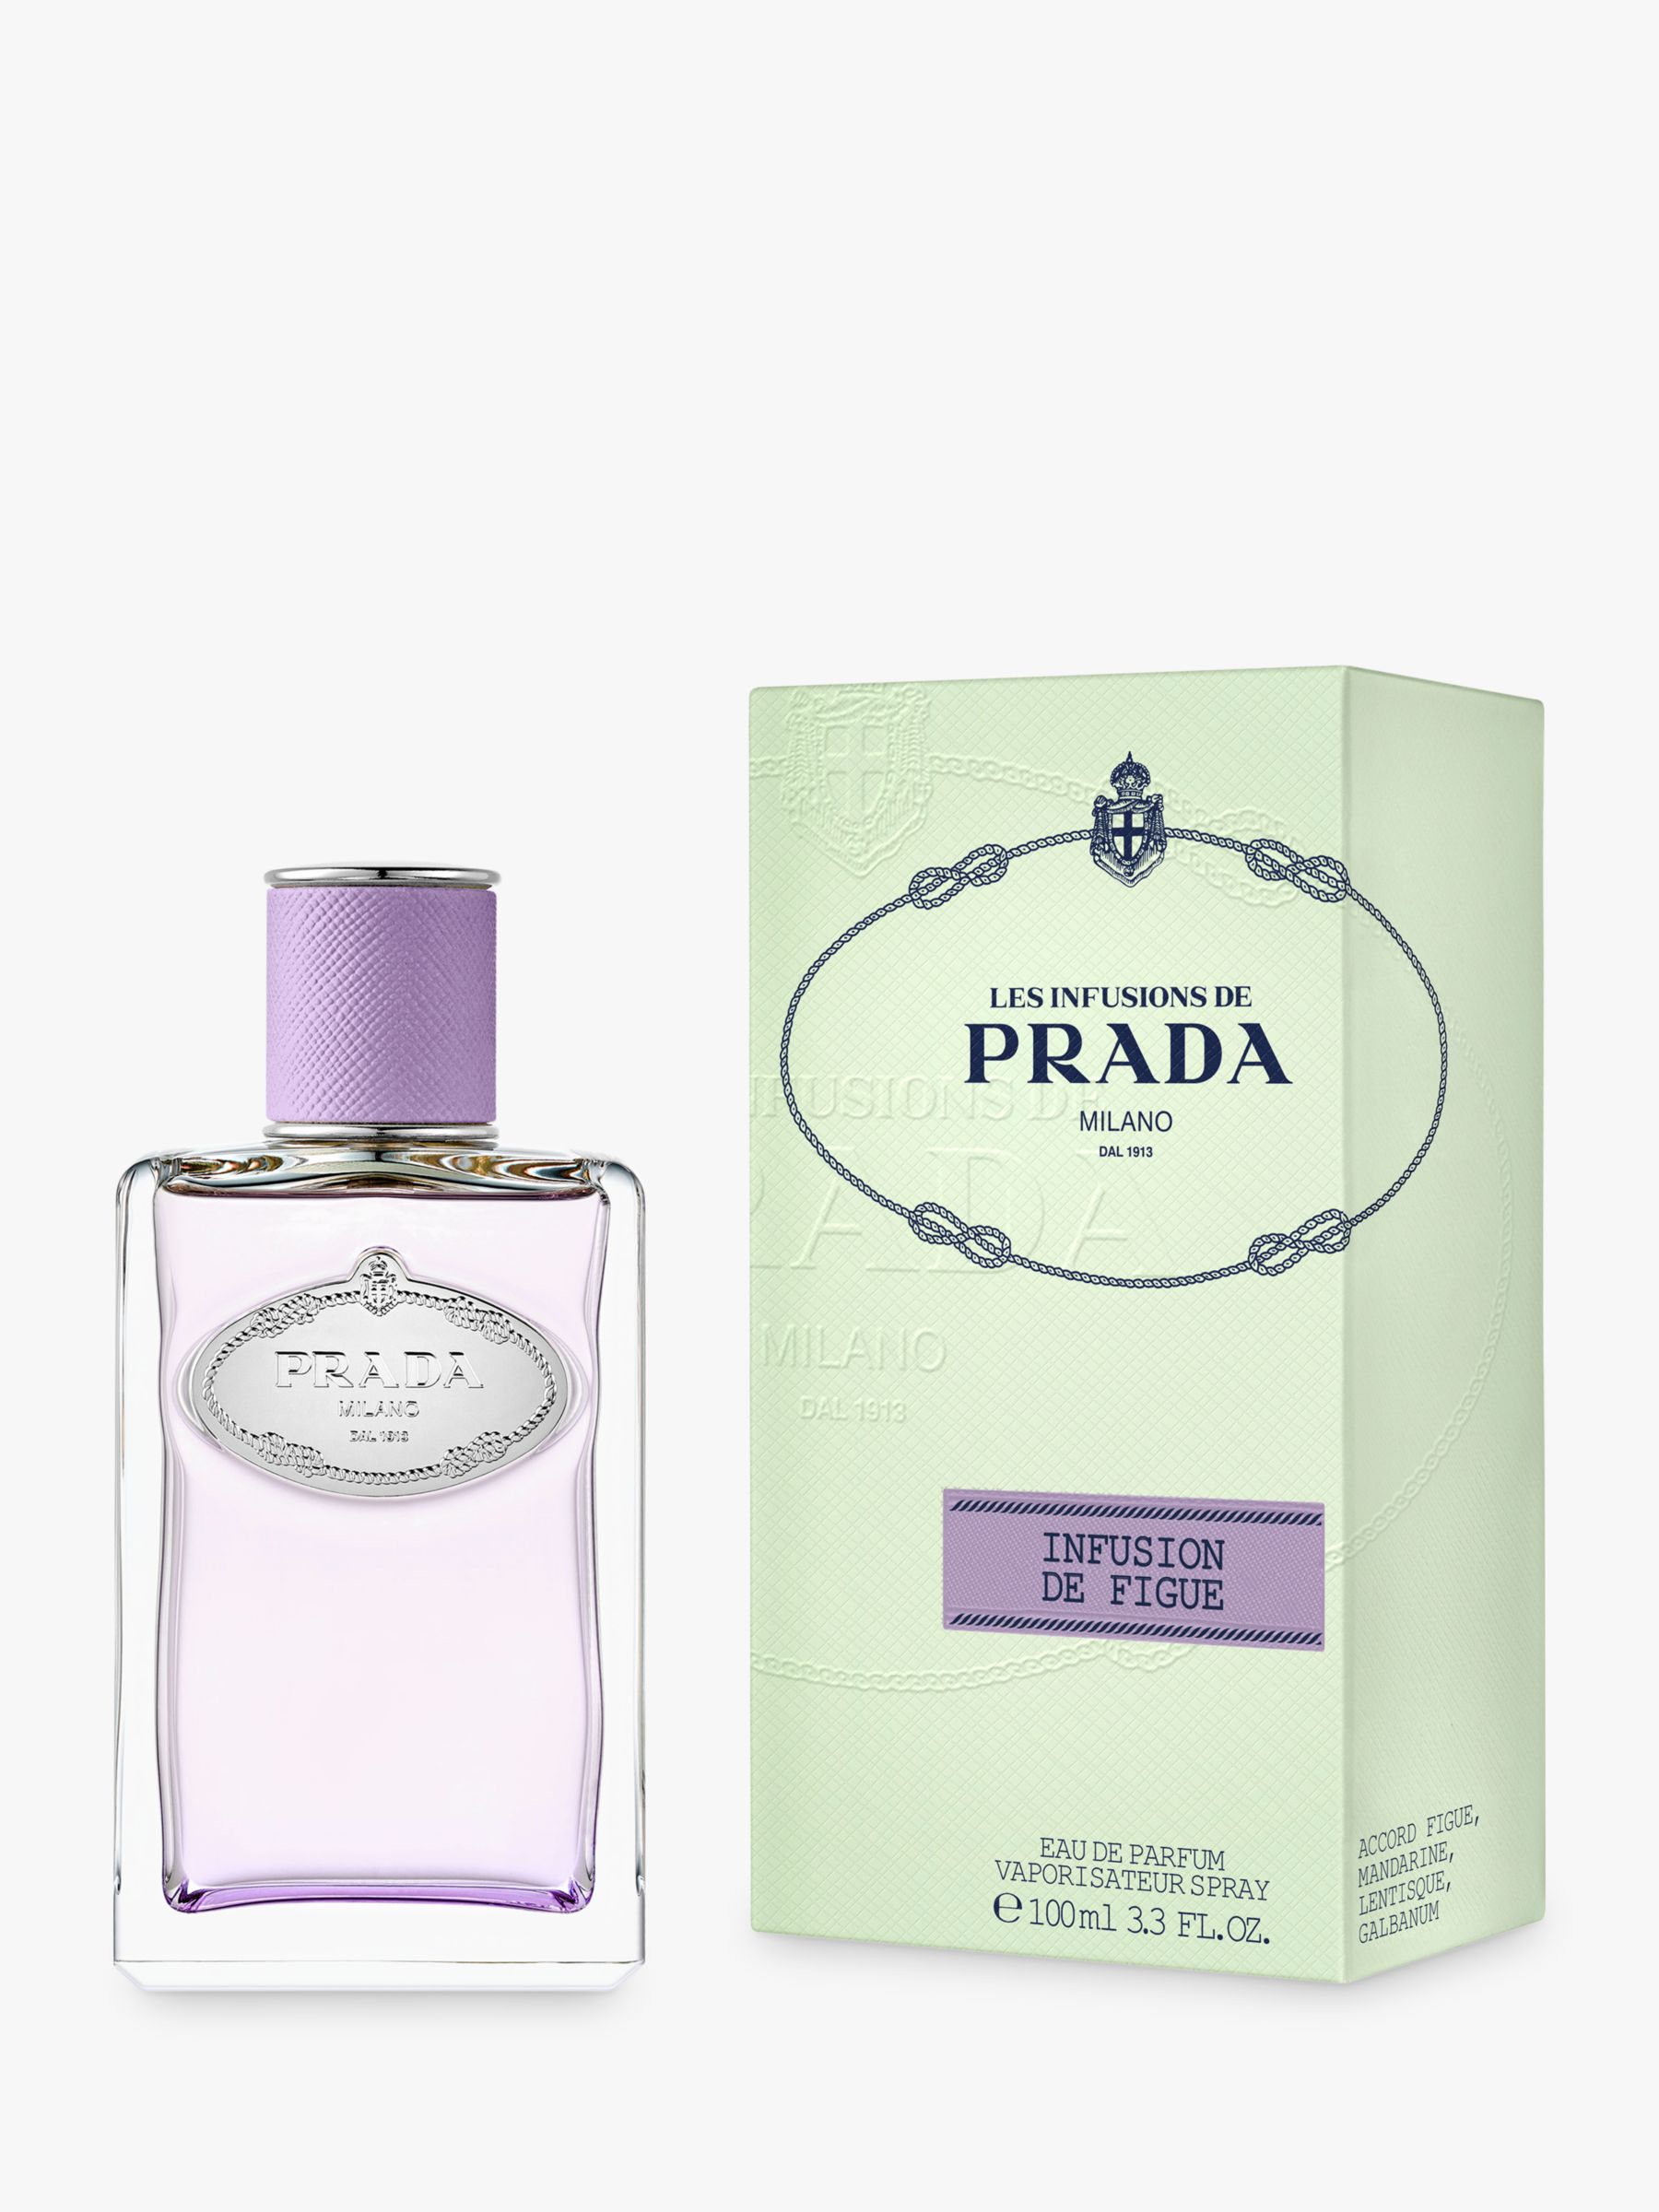 Prada Les Infusions de Prada Infusion de Figue Eau de Parfum, 100ml at John  Lewis & Partners